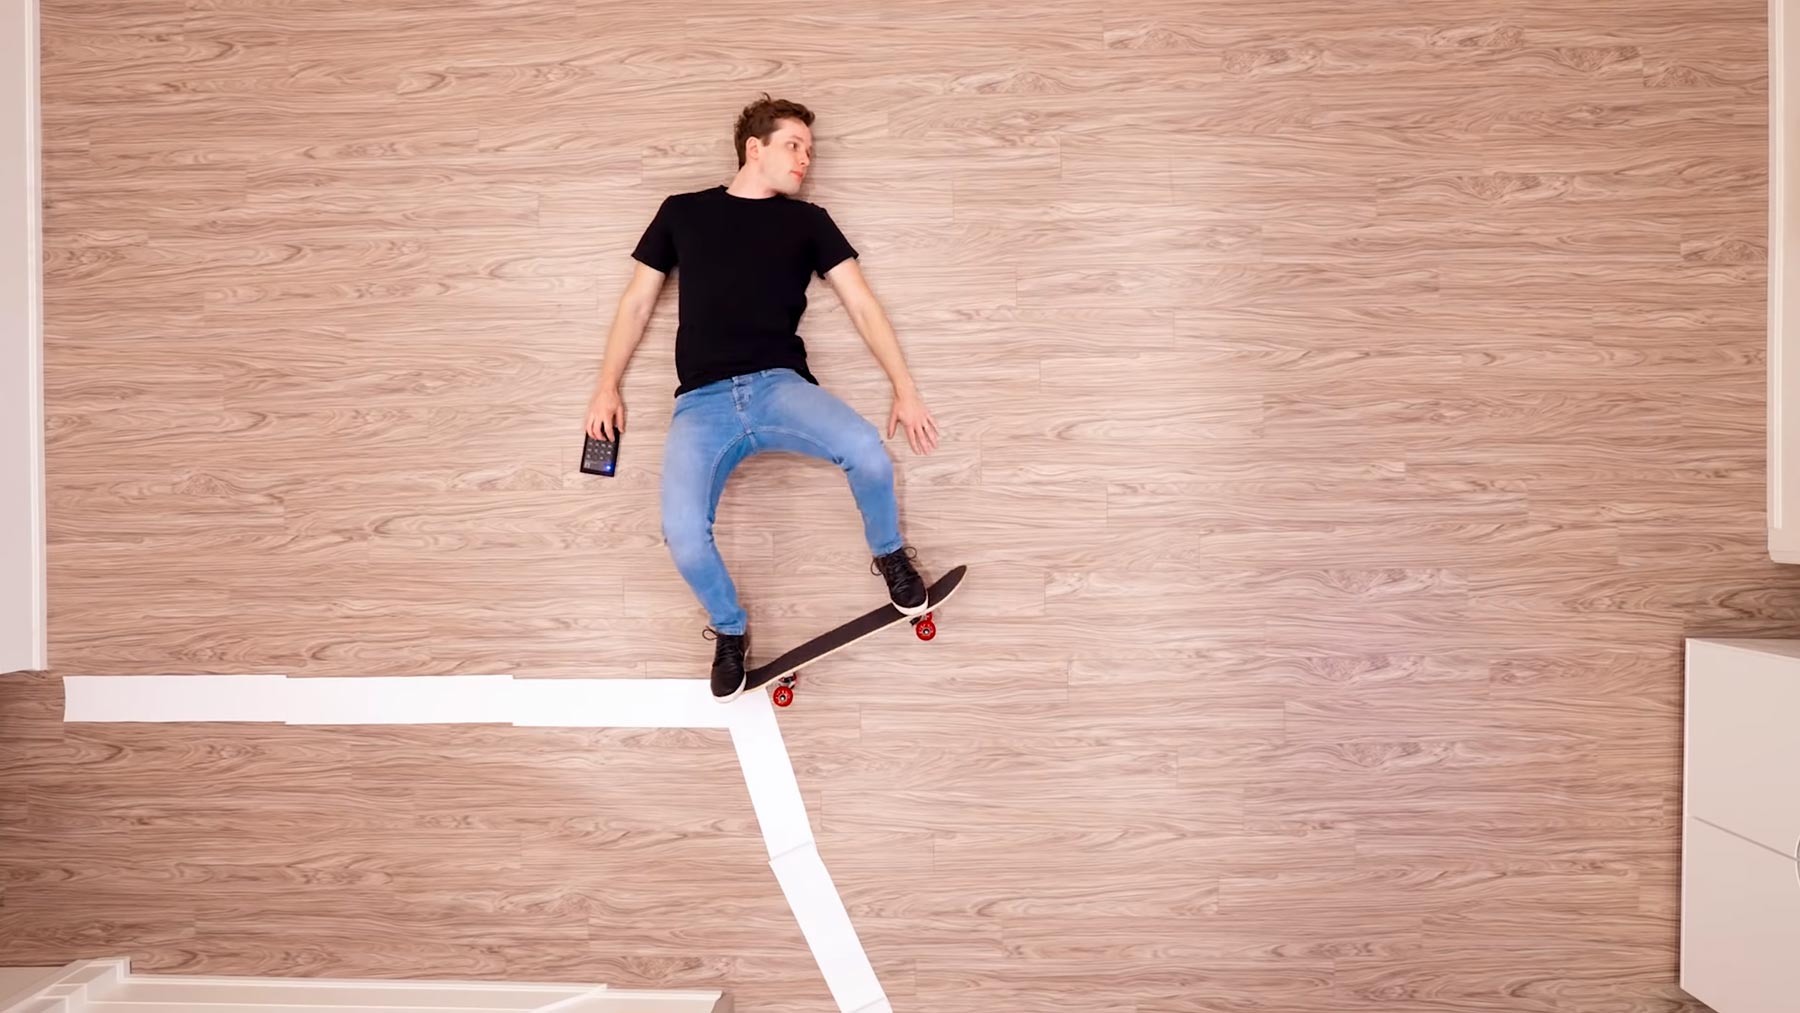 Kevin Parry fährt auf dem Boden liegend Skateboard Skateboard-Stop-Motion-Animation 